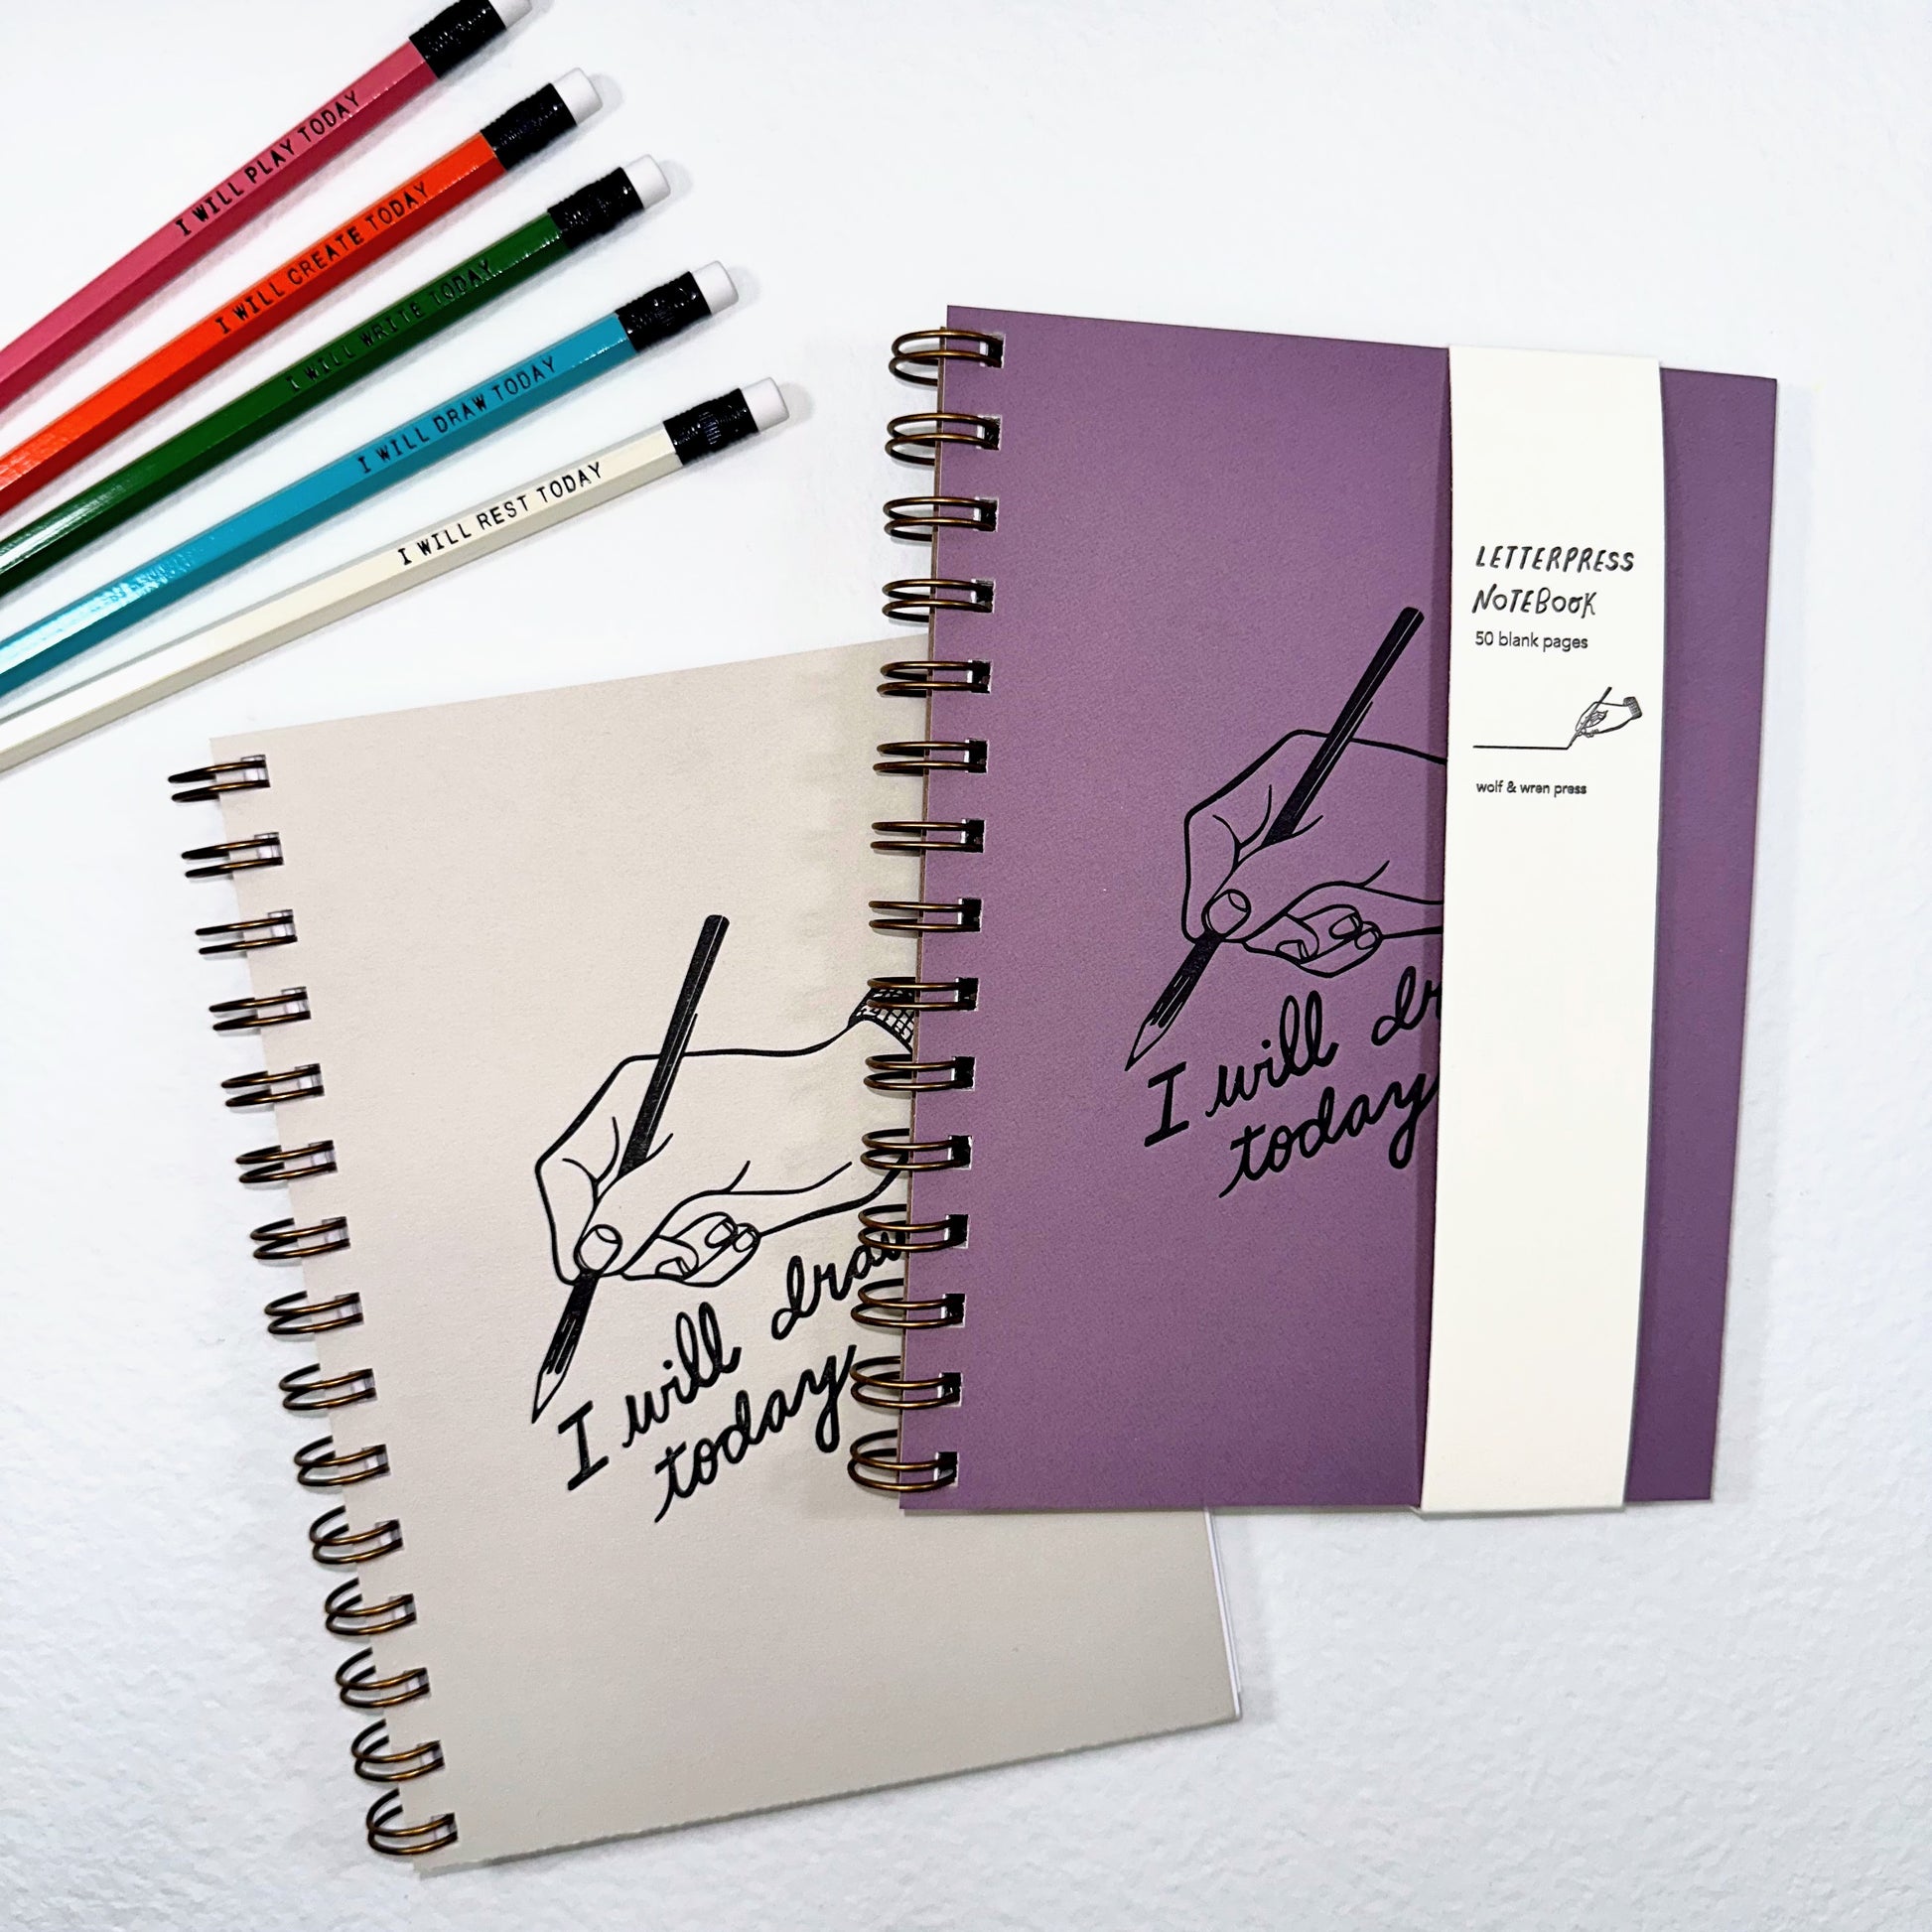 4 Magic Writing Notebooks - Draw'n Drop – Drawndrop